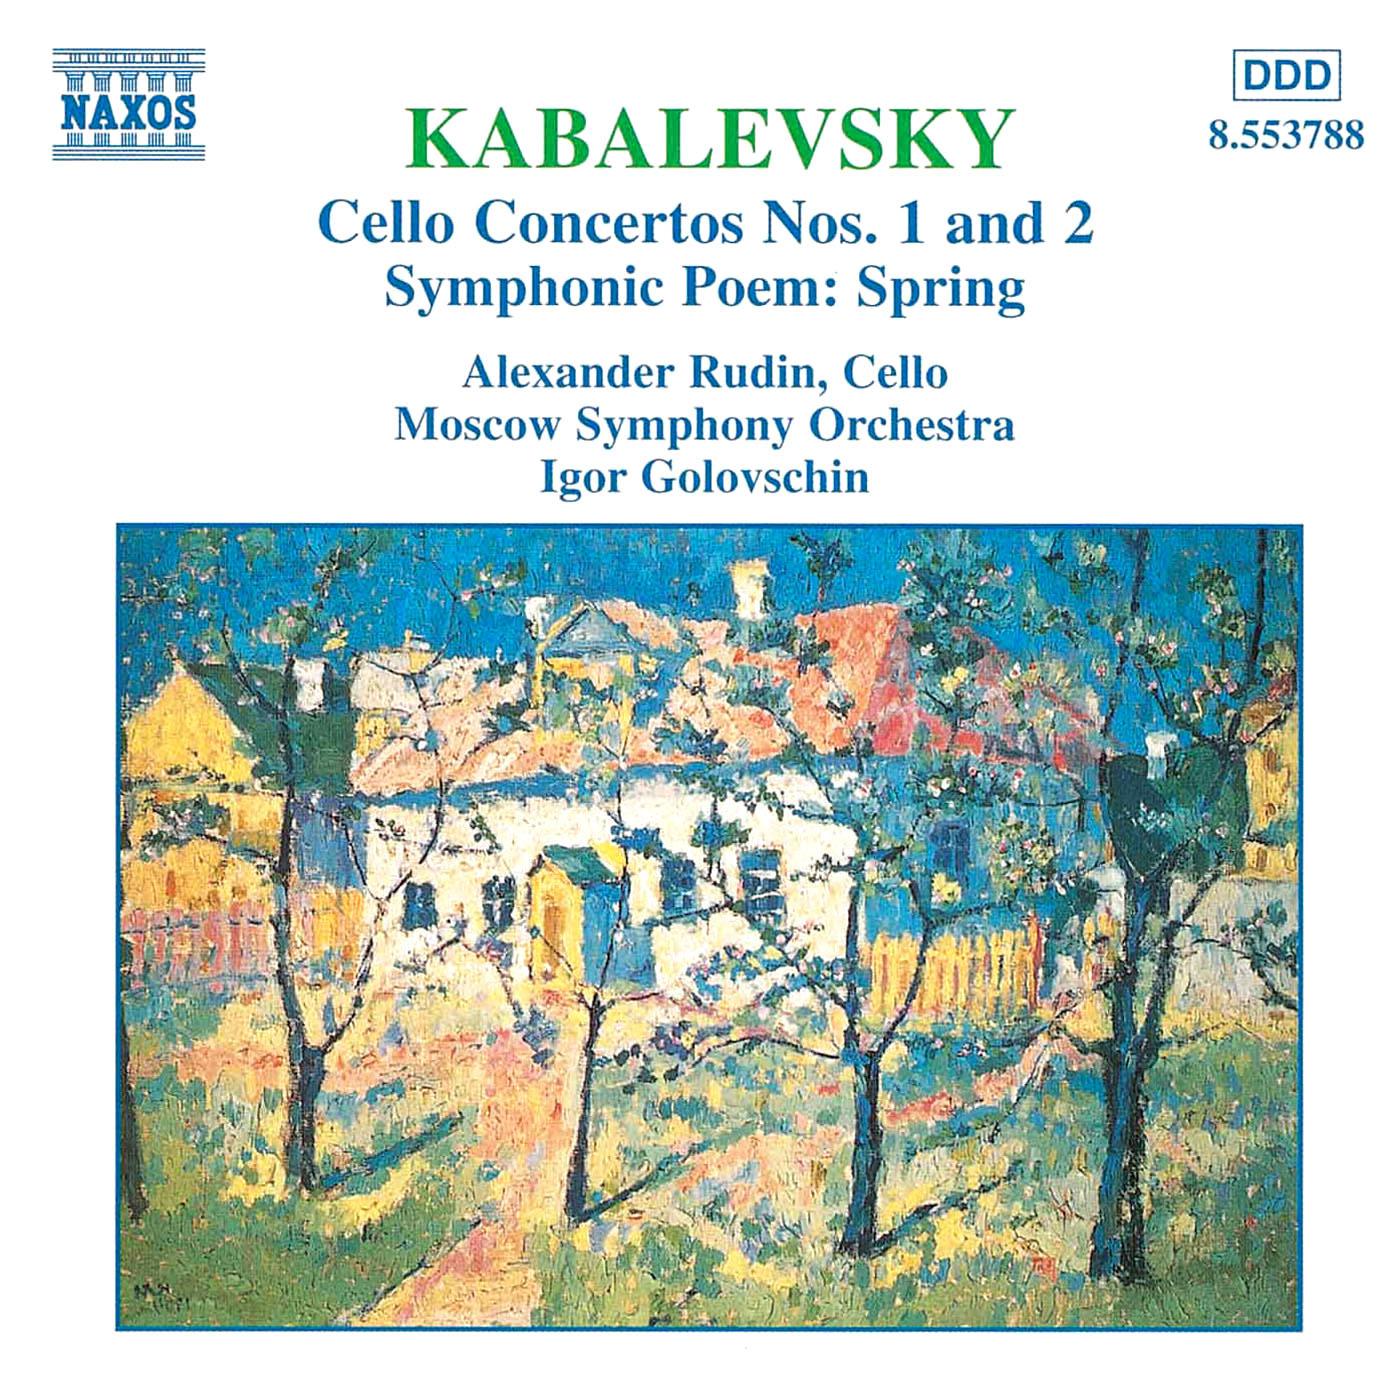 KABALEVSKY: Cello Concertos Nos. 1 and 2 / Spring, Op. 65